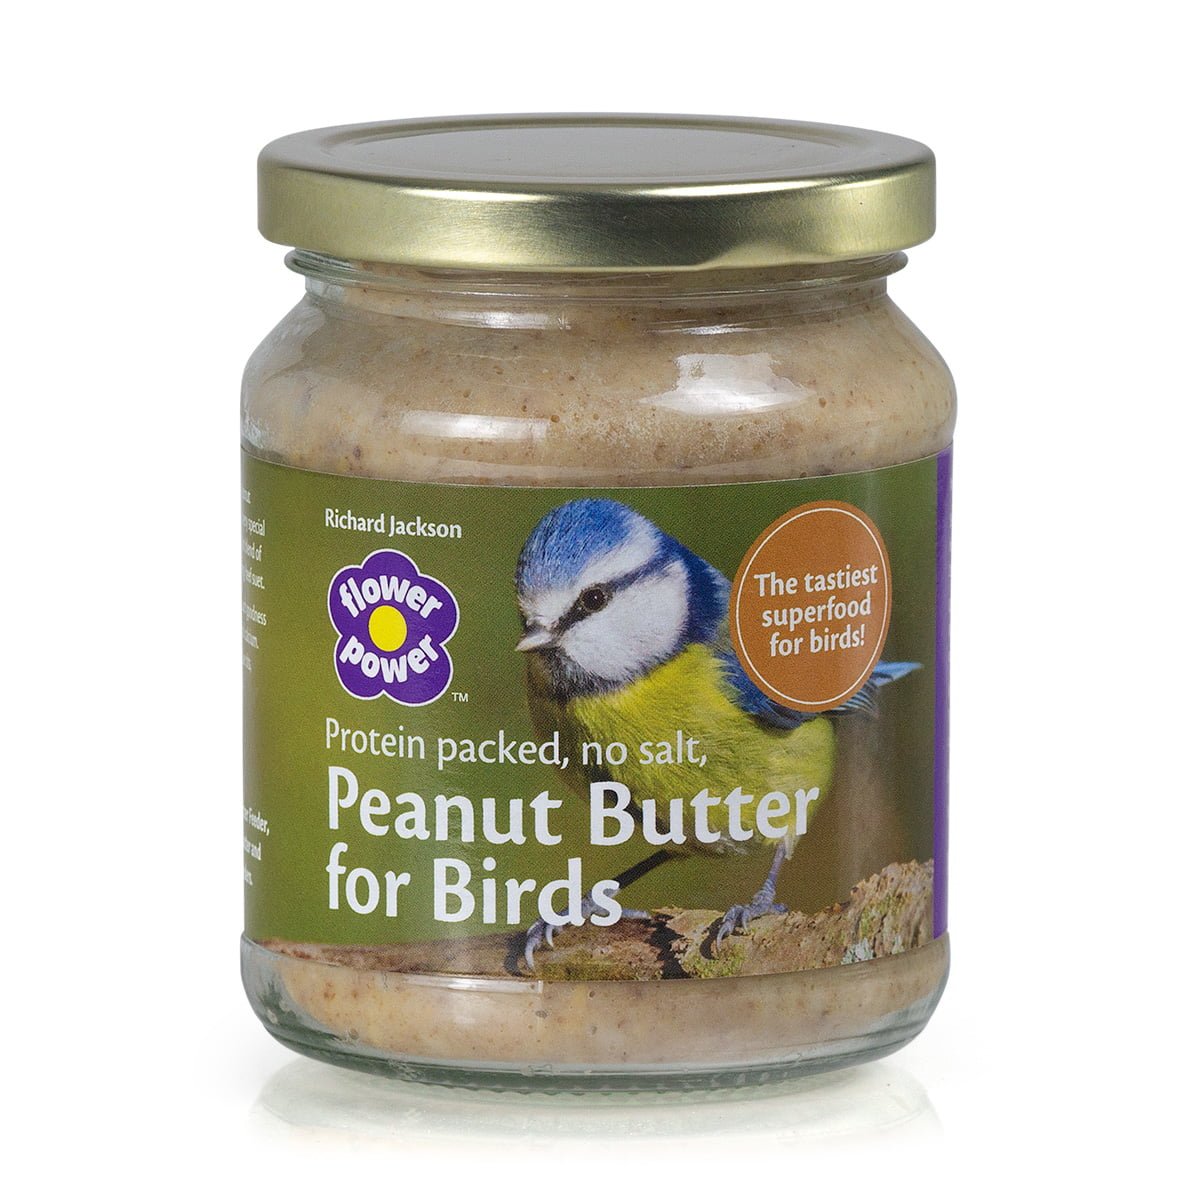 A jar of Richard Jackson peanut butter bird food